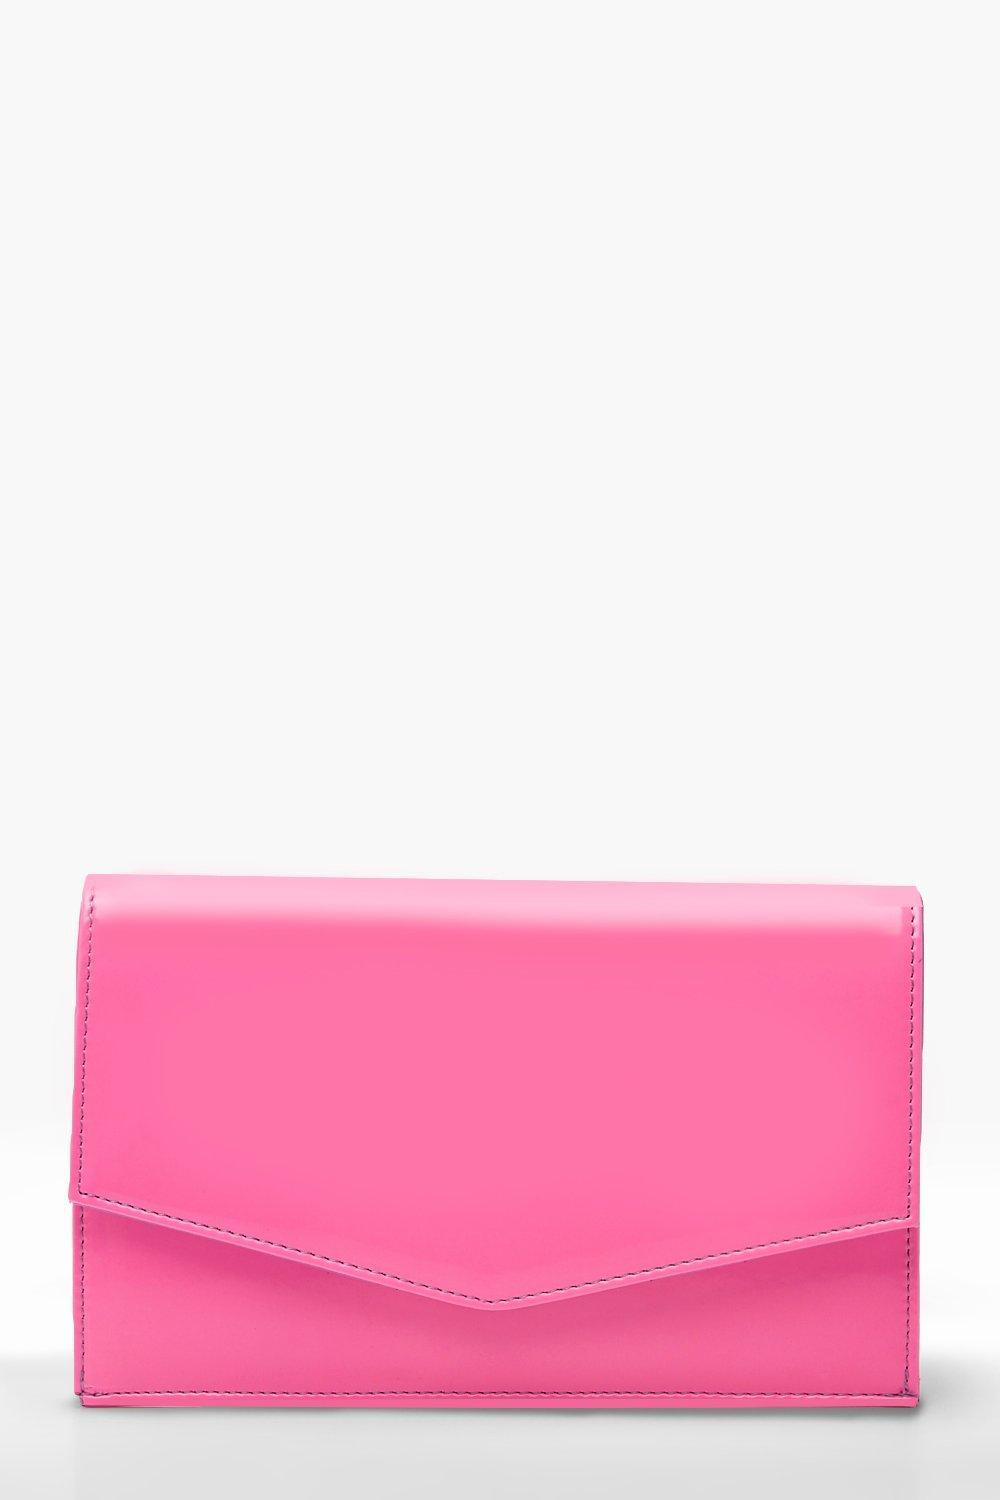 Boohoo Neon Envelope Clutch & Chain in Pink - Lyst